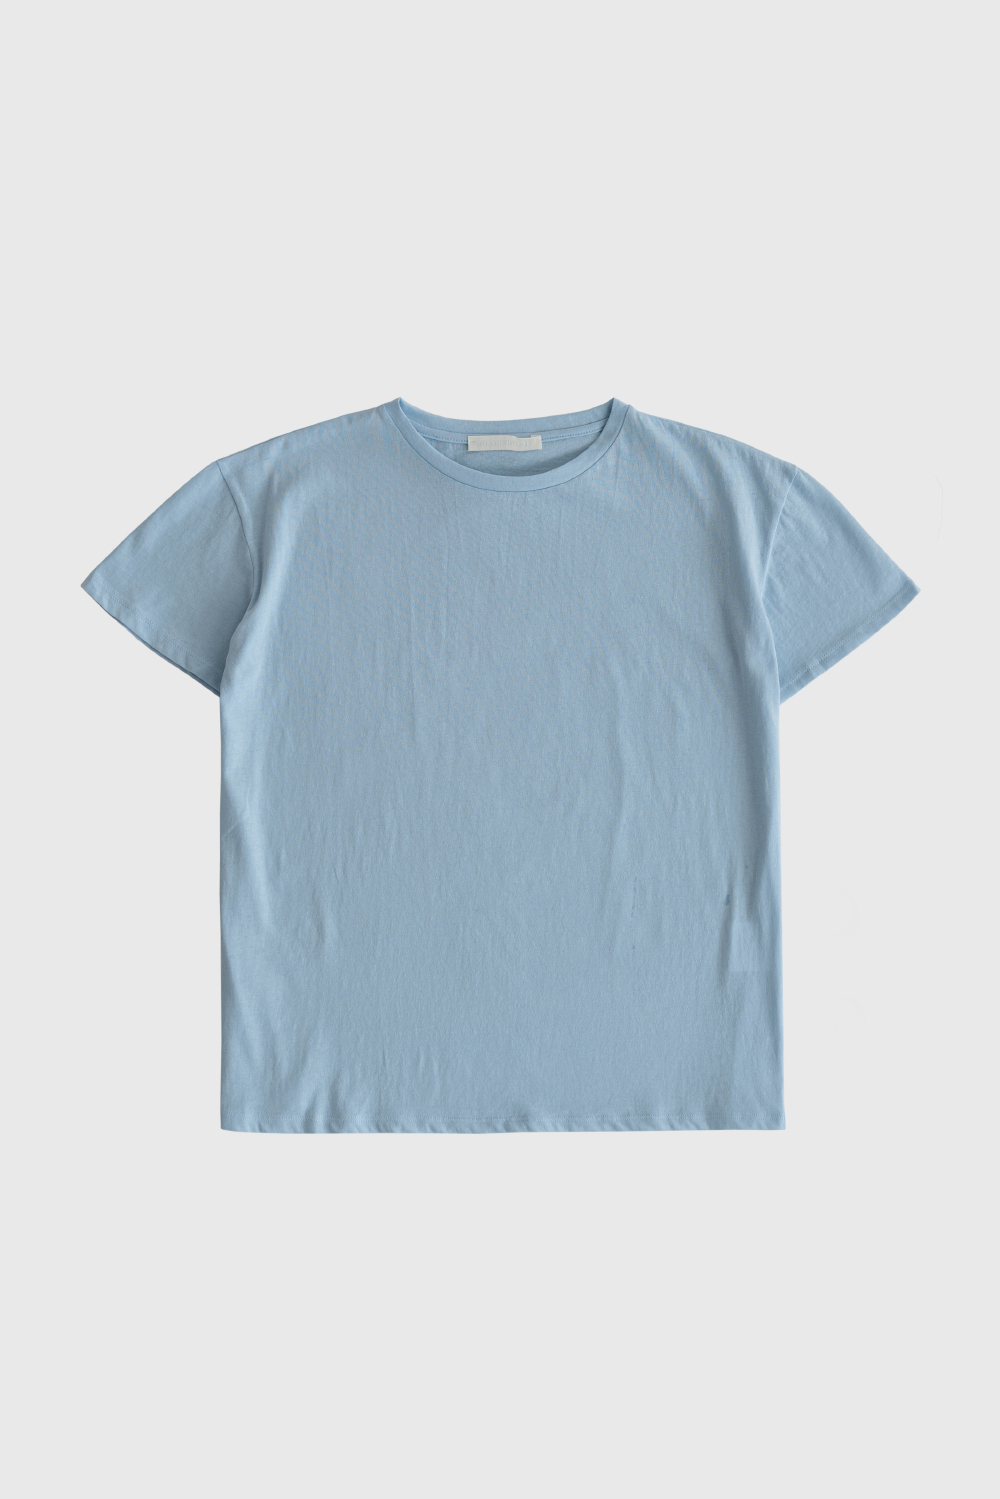 17496_Raw Cotton T shirt